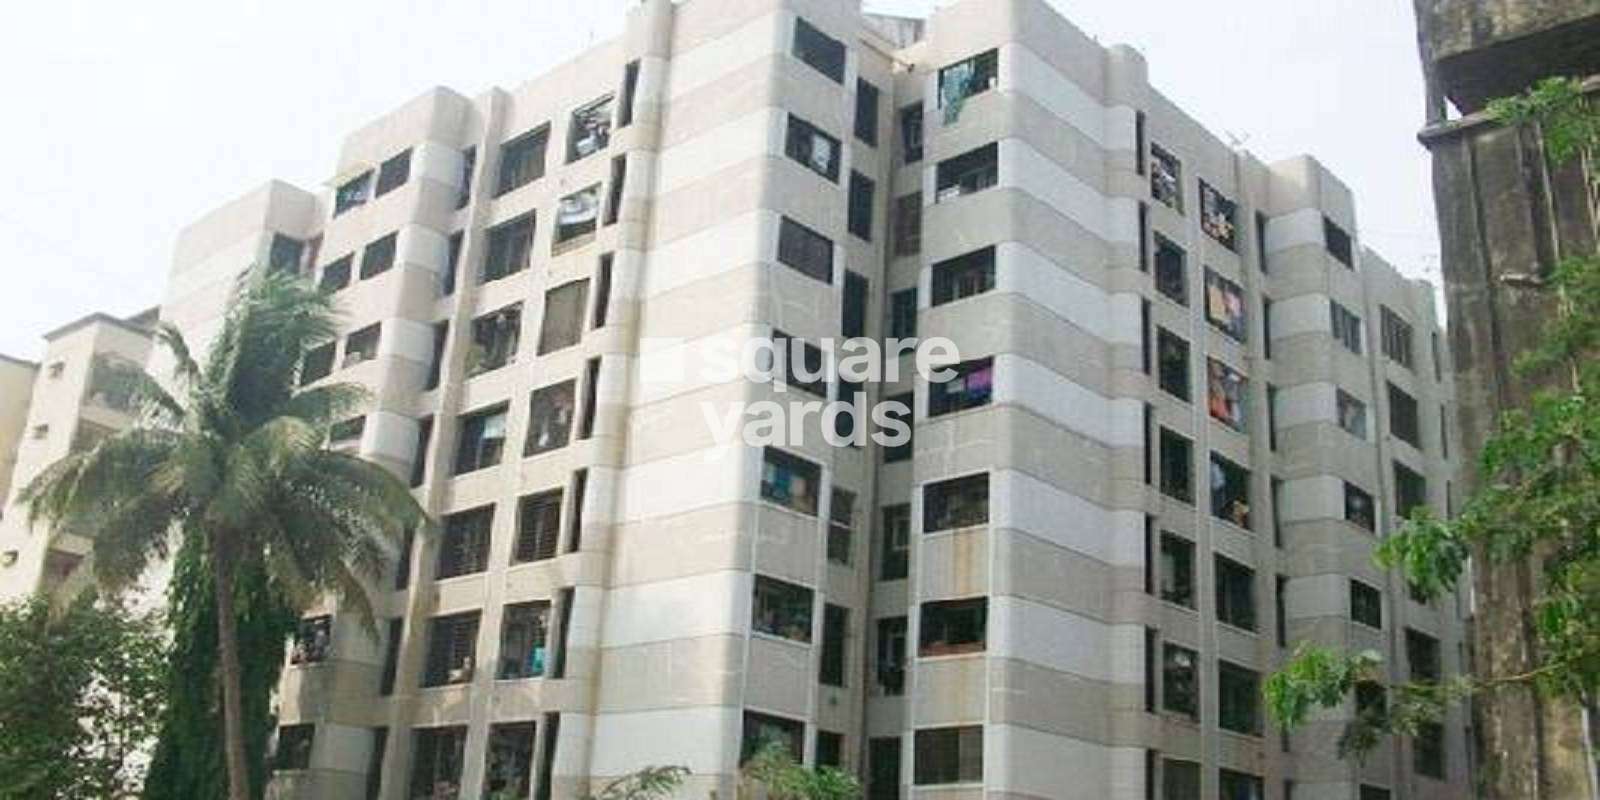 Neel Sagar Apartments Cover Image